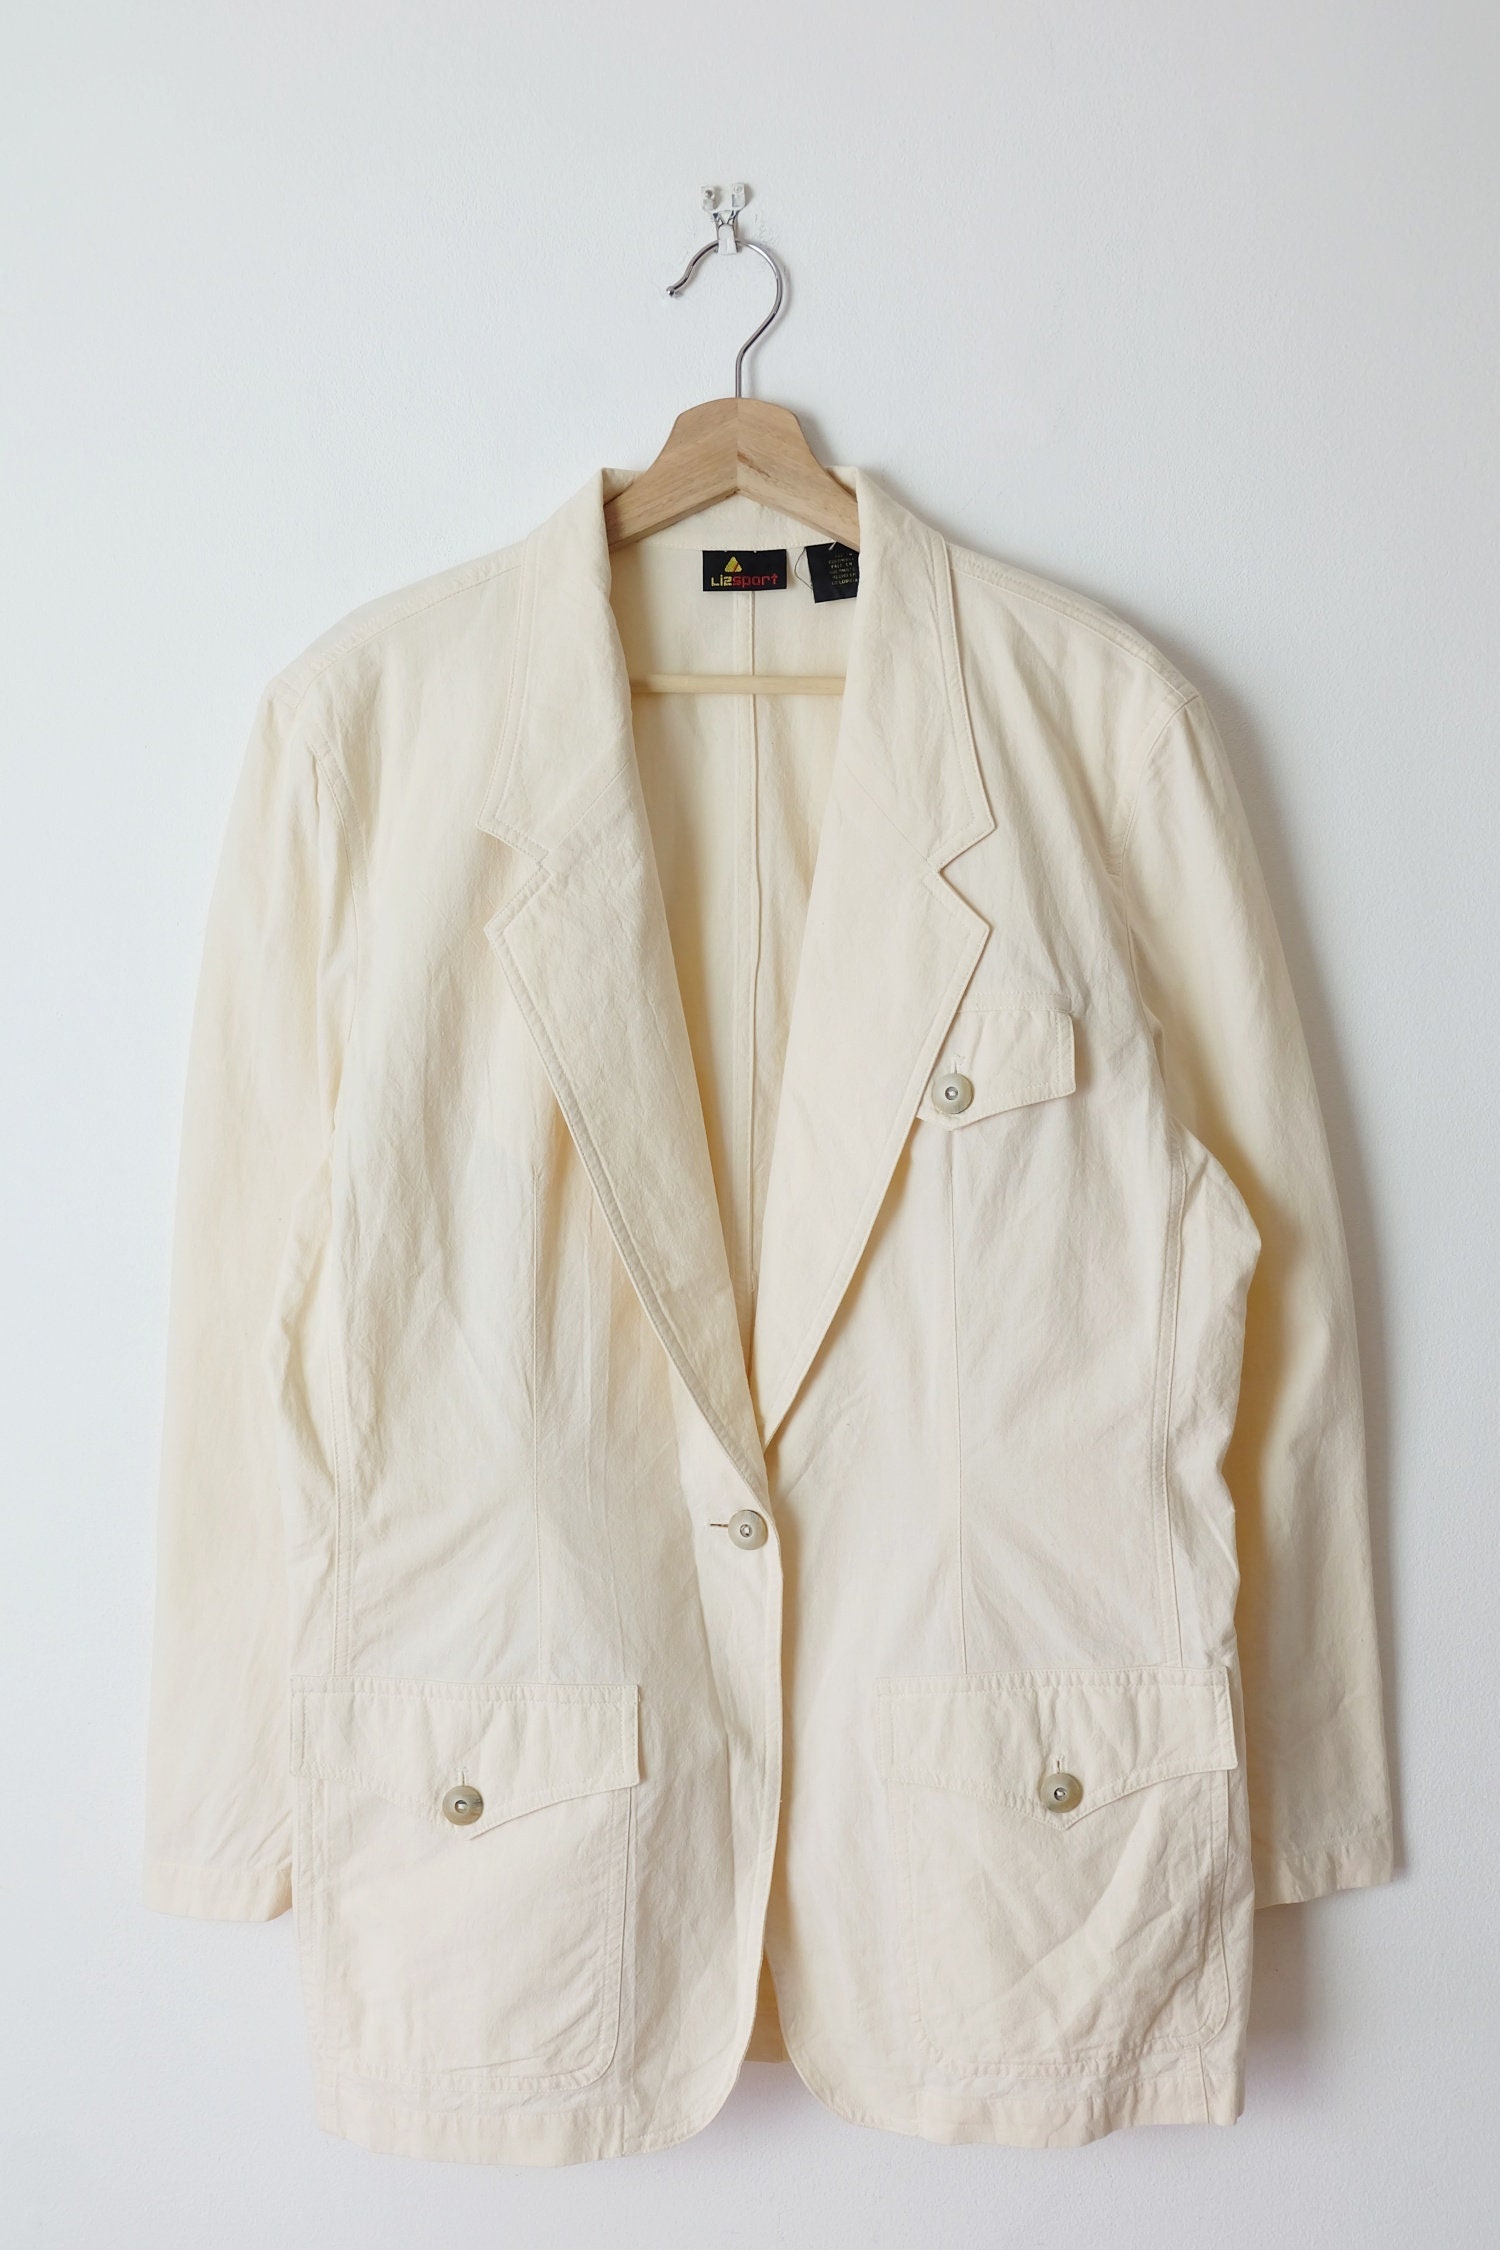 Vintage Ivory/Ecru Women's Cotton Blazer Jacket/Minimal | Etsy